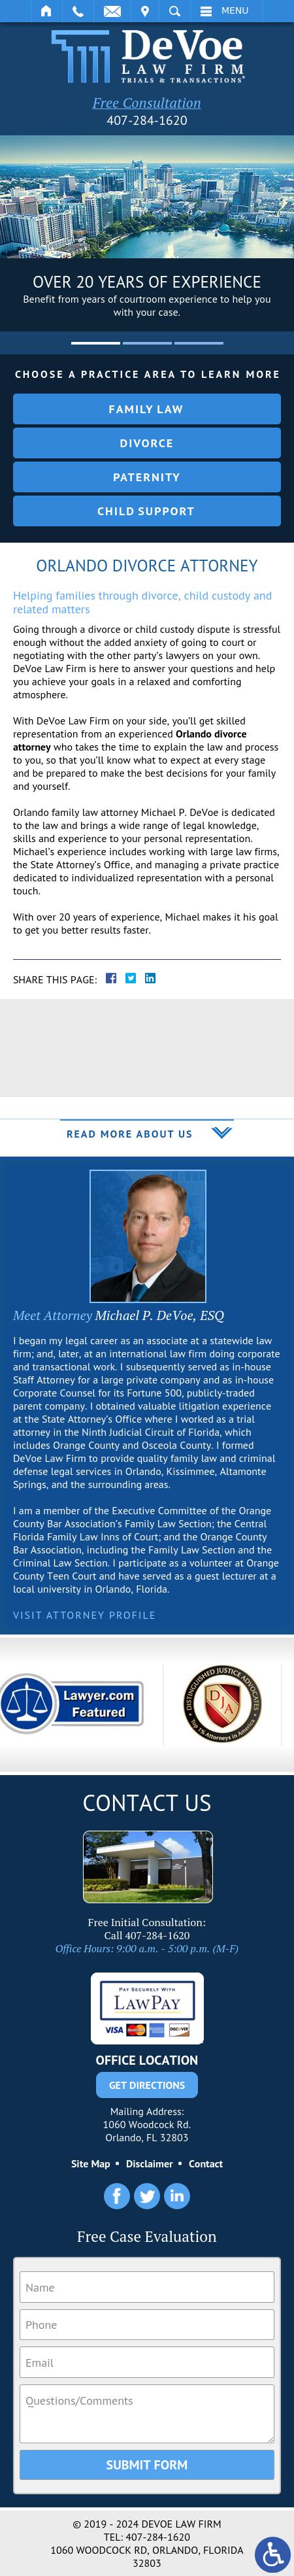 DeVoe Law Firm - Orlando FL Lawyers